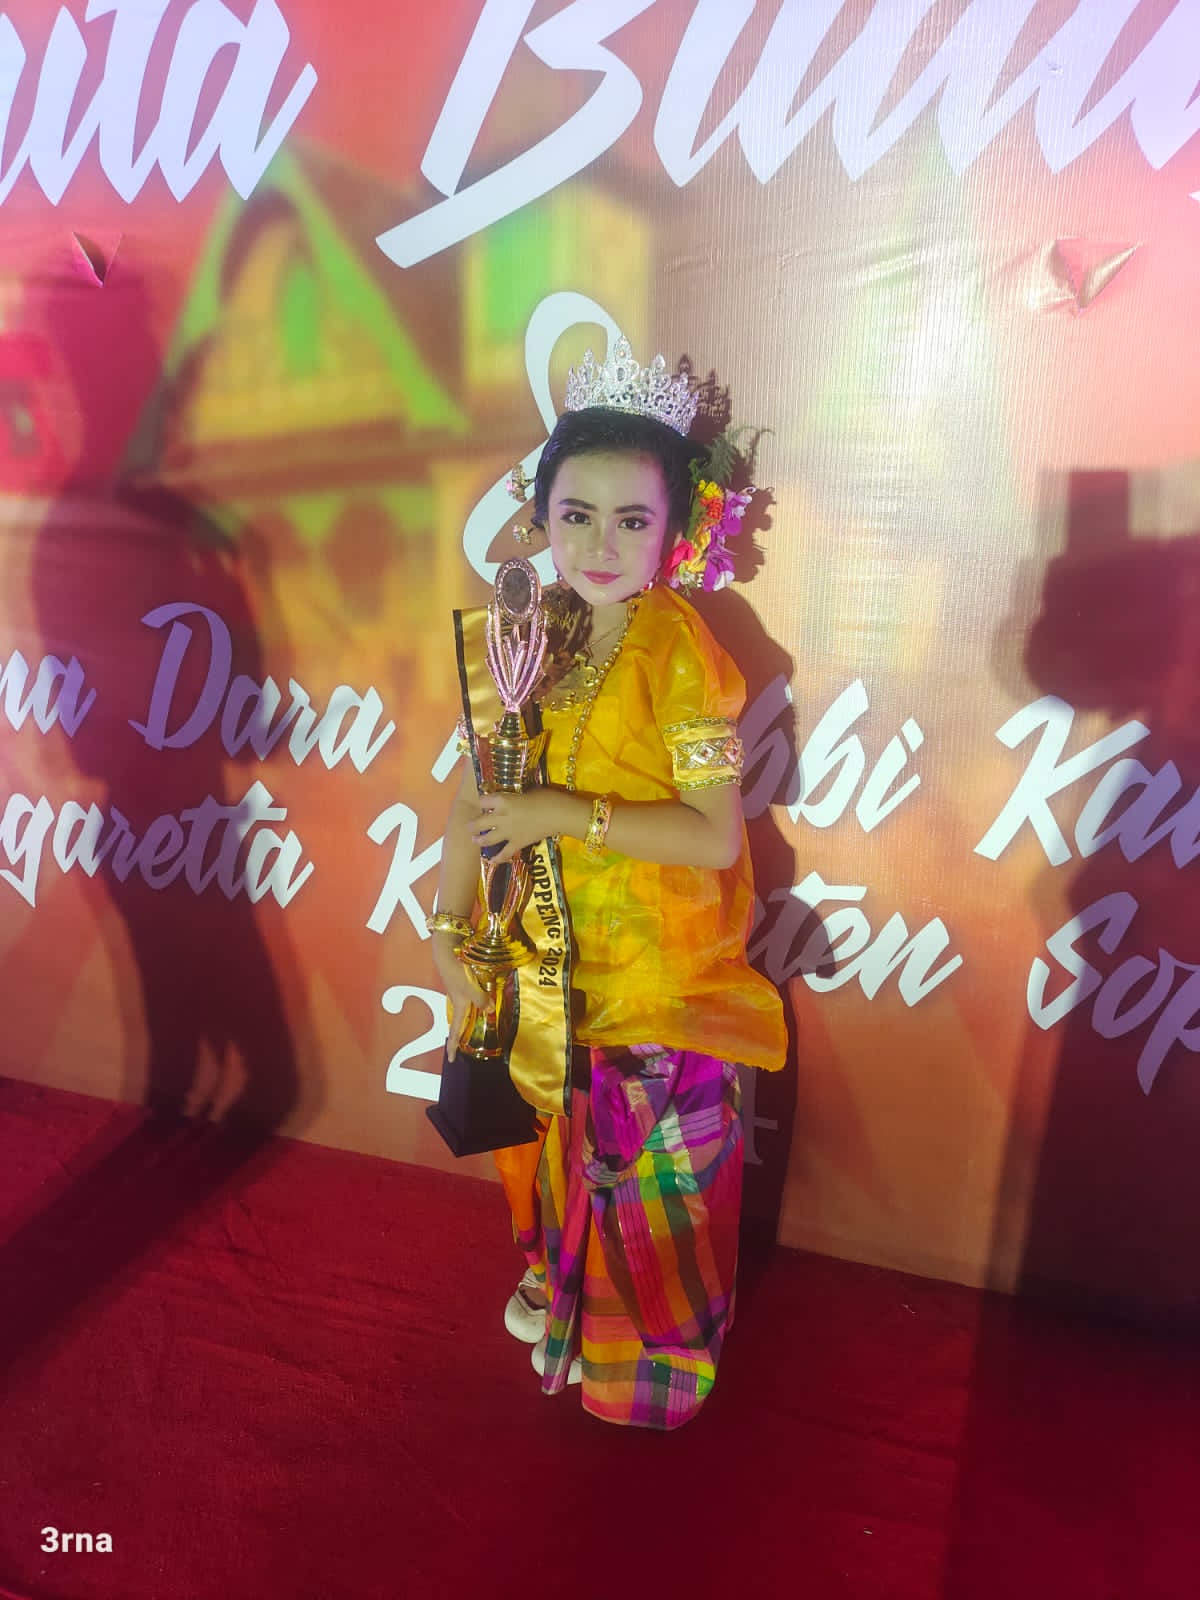 Arinda Nur Maulidya Raih Gelar Juara 1 Ana Dara Malebbi Kabupaten Soppeng